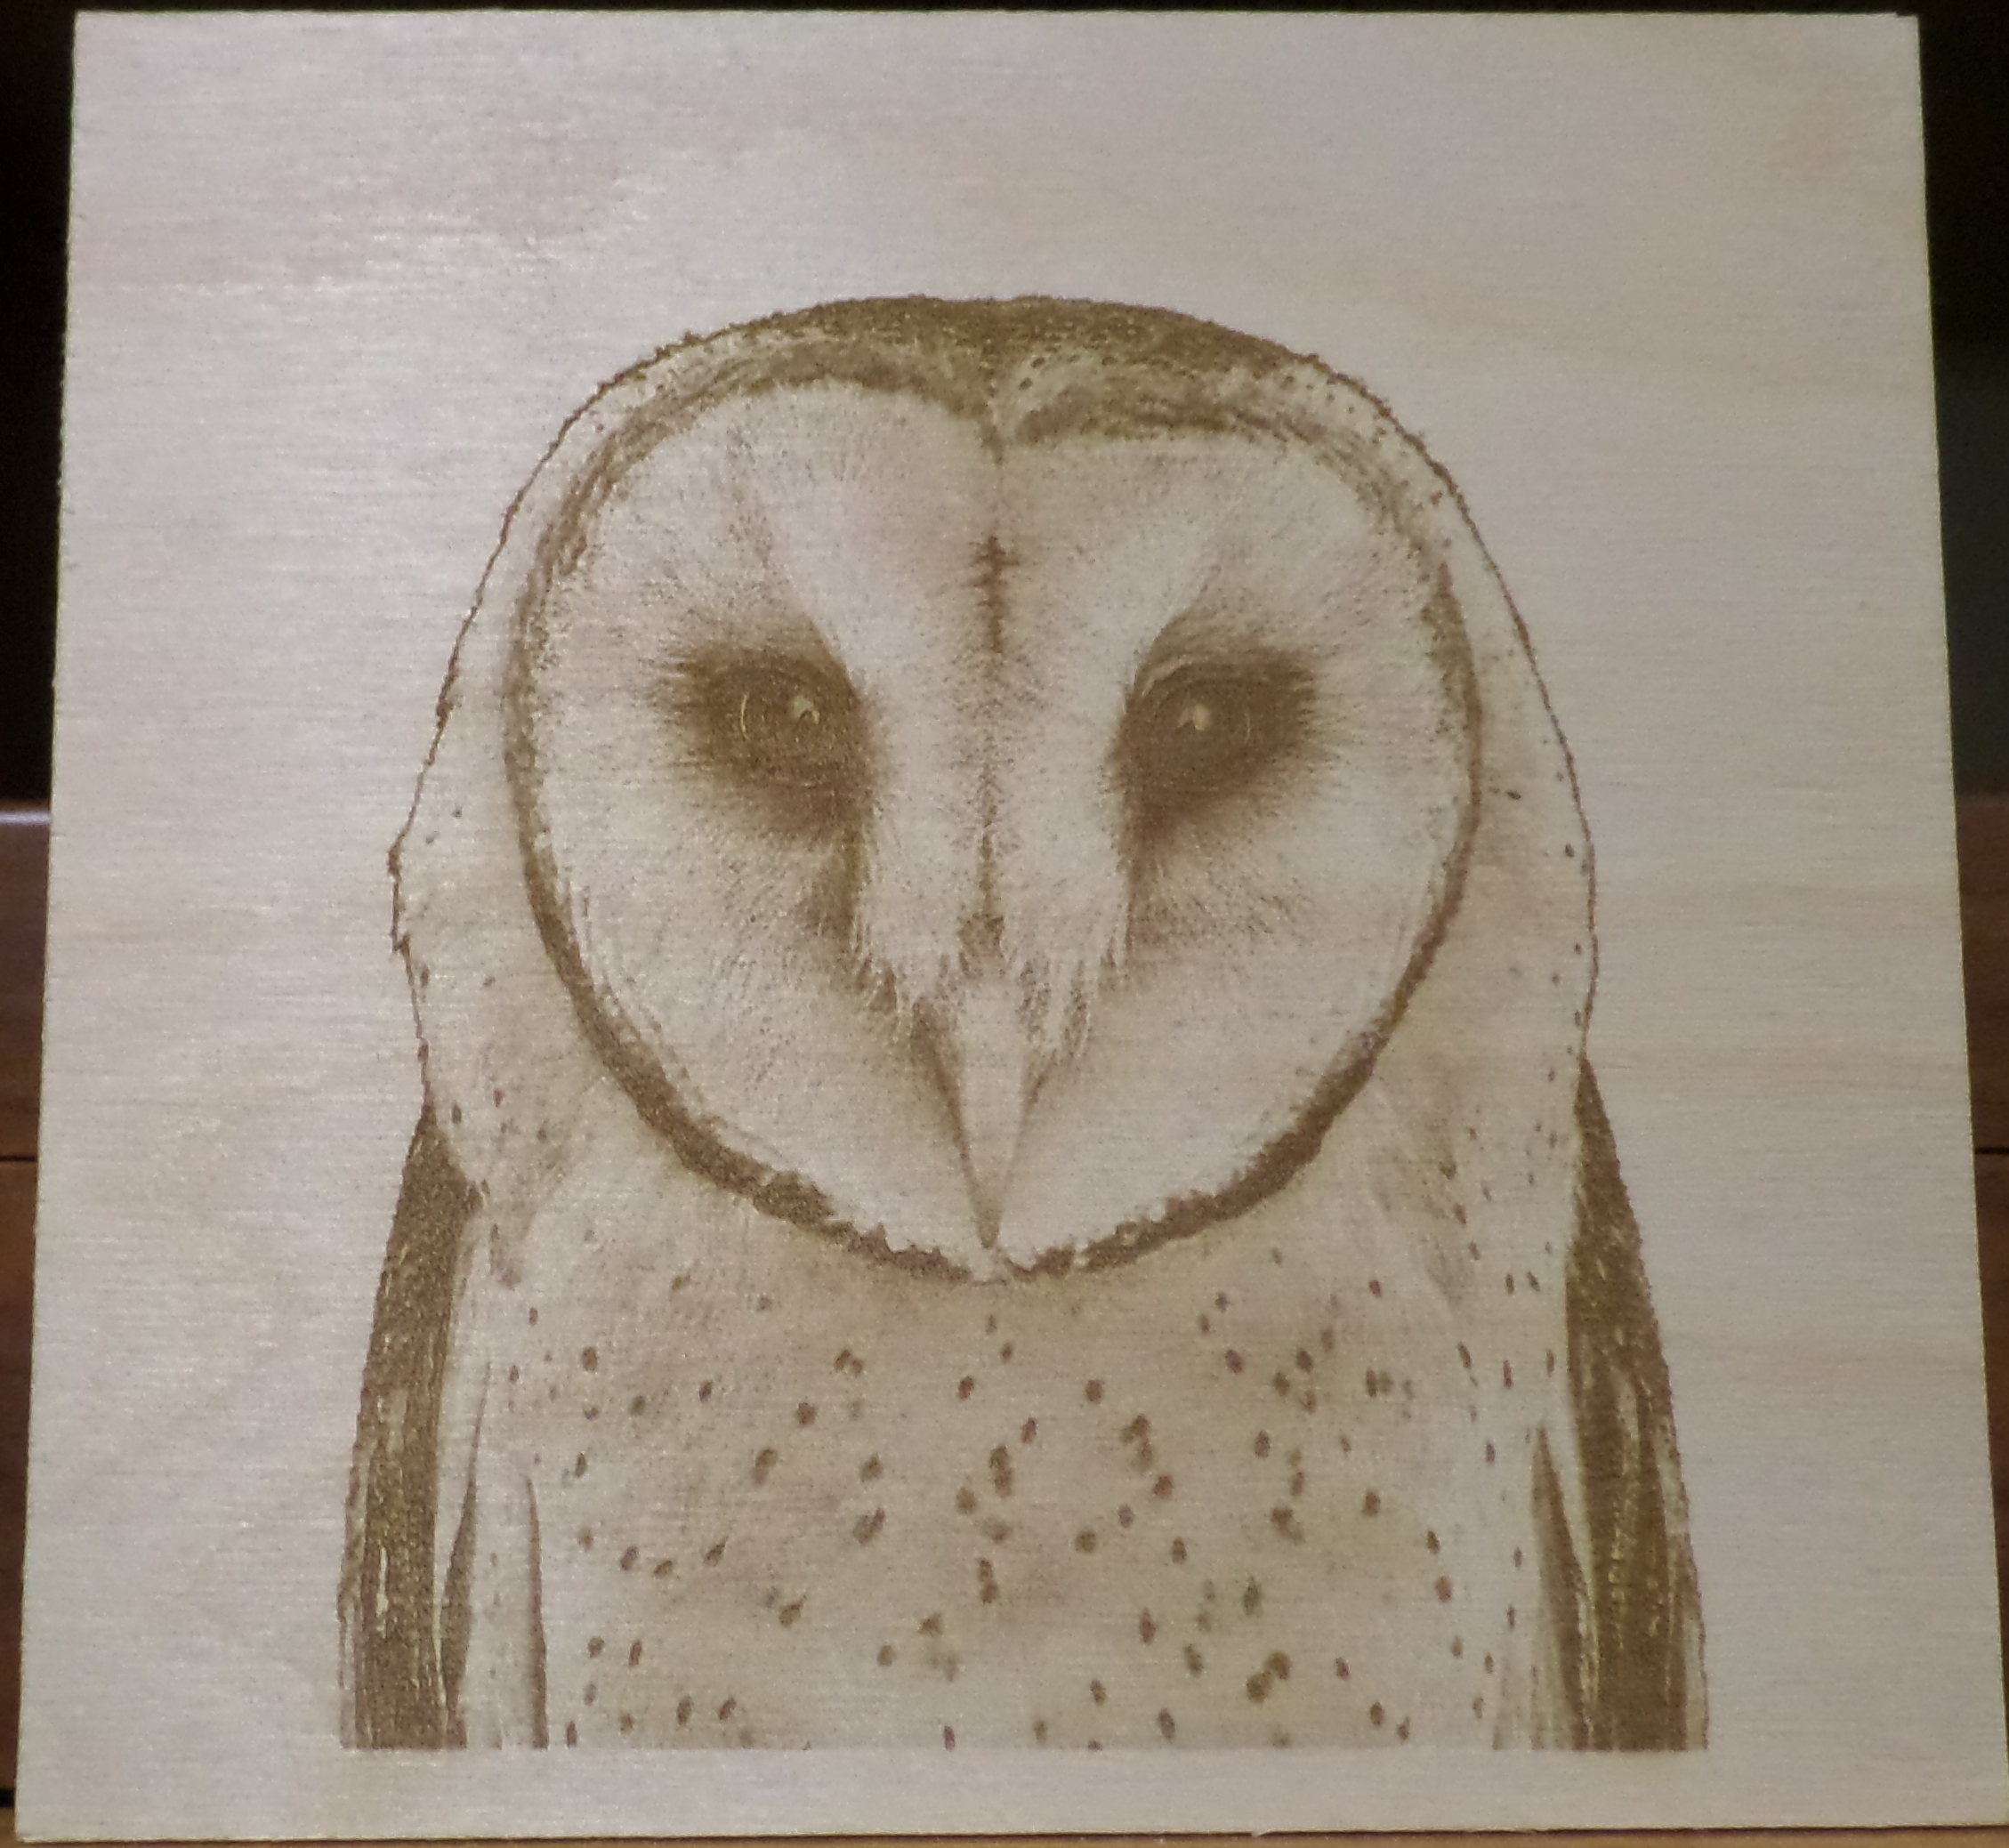 owl-2.jpg